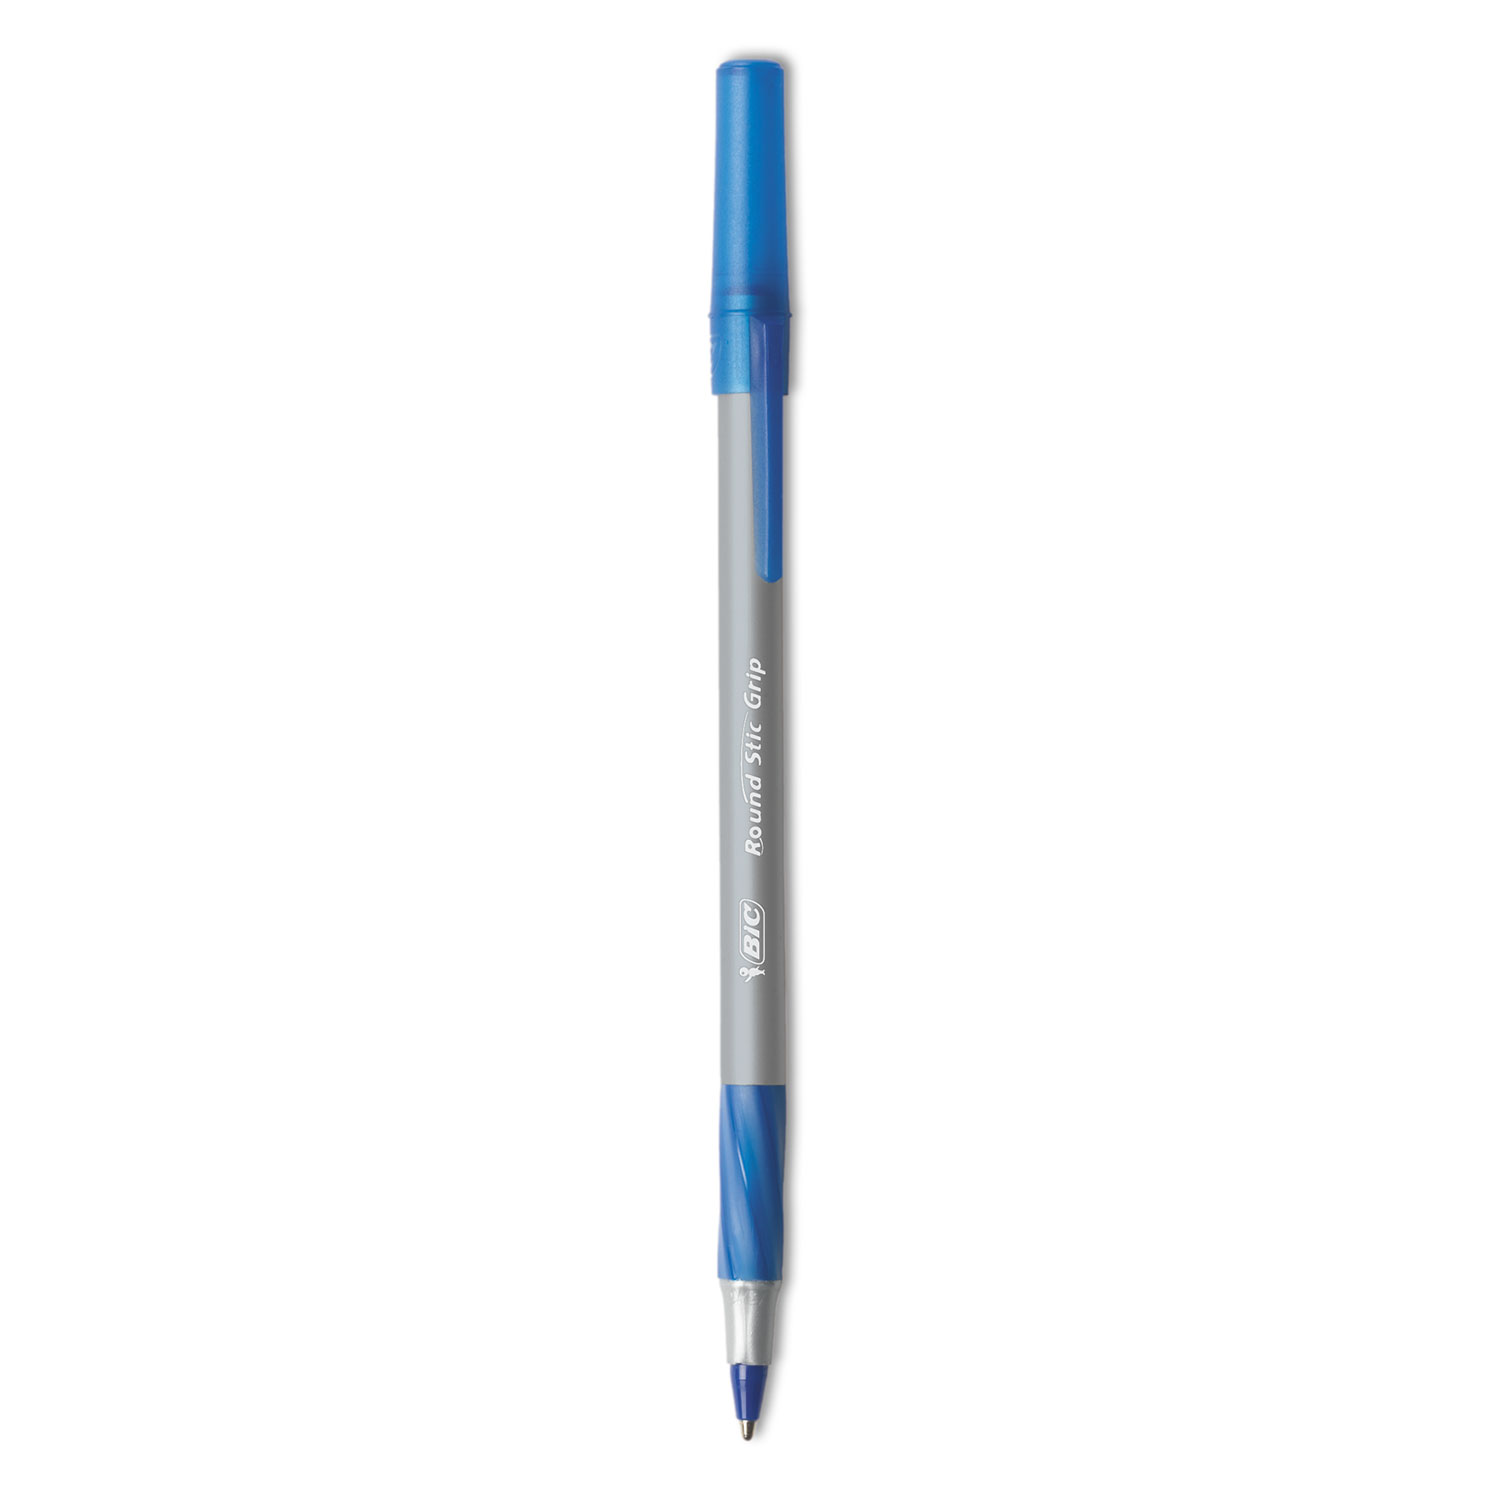 Round Stic Grip Xtra Comfort Ballpoint Pen, Black/Blue, 1.2mm, Medium, 36/Pack